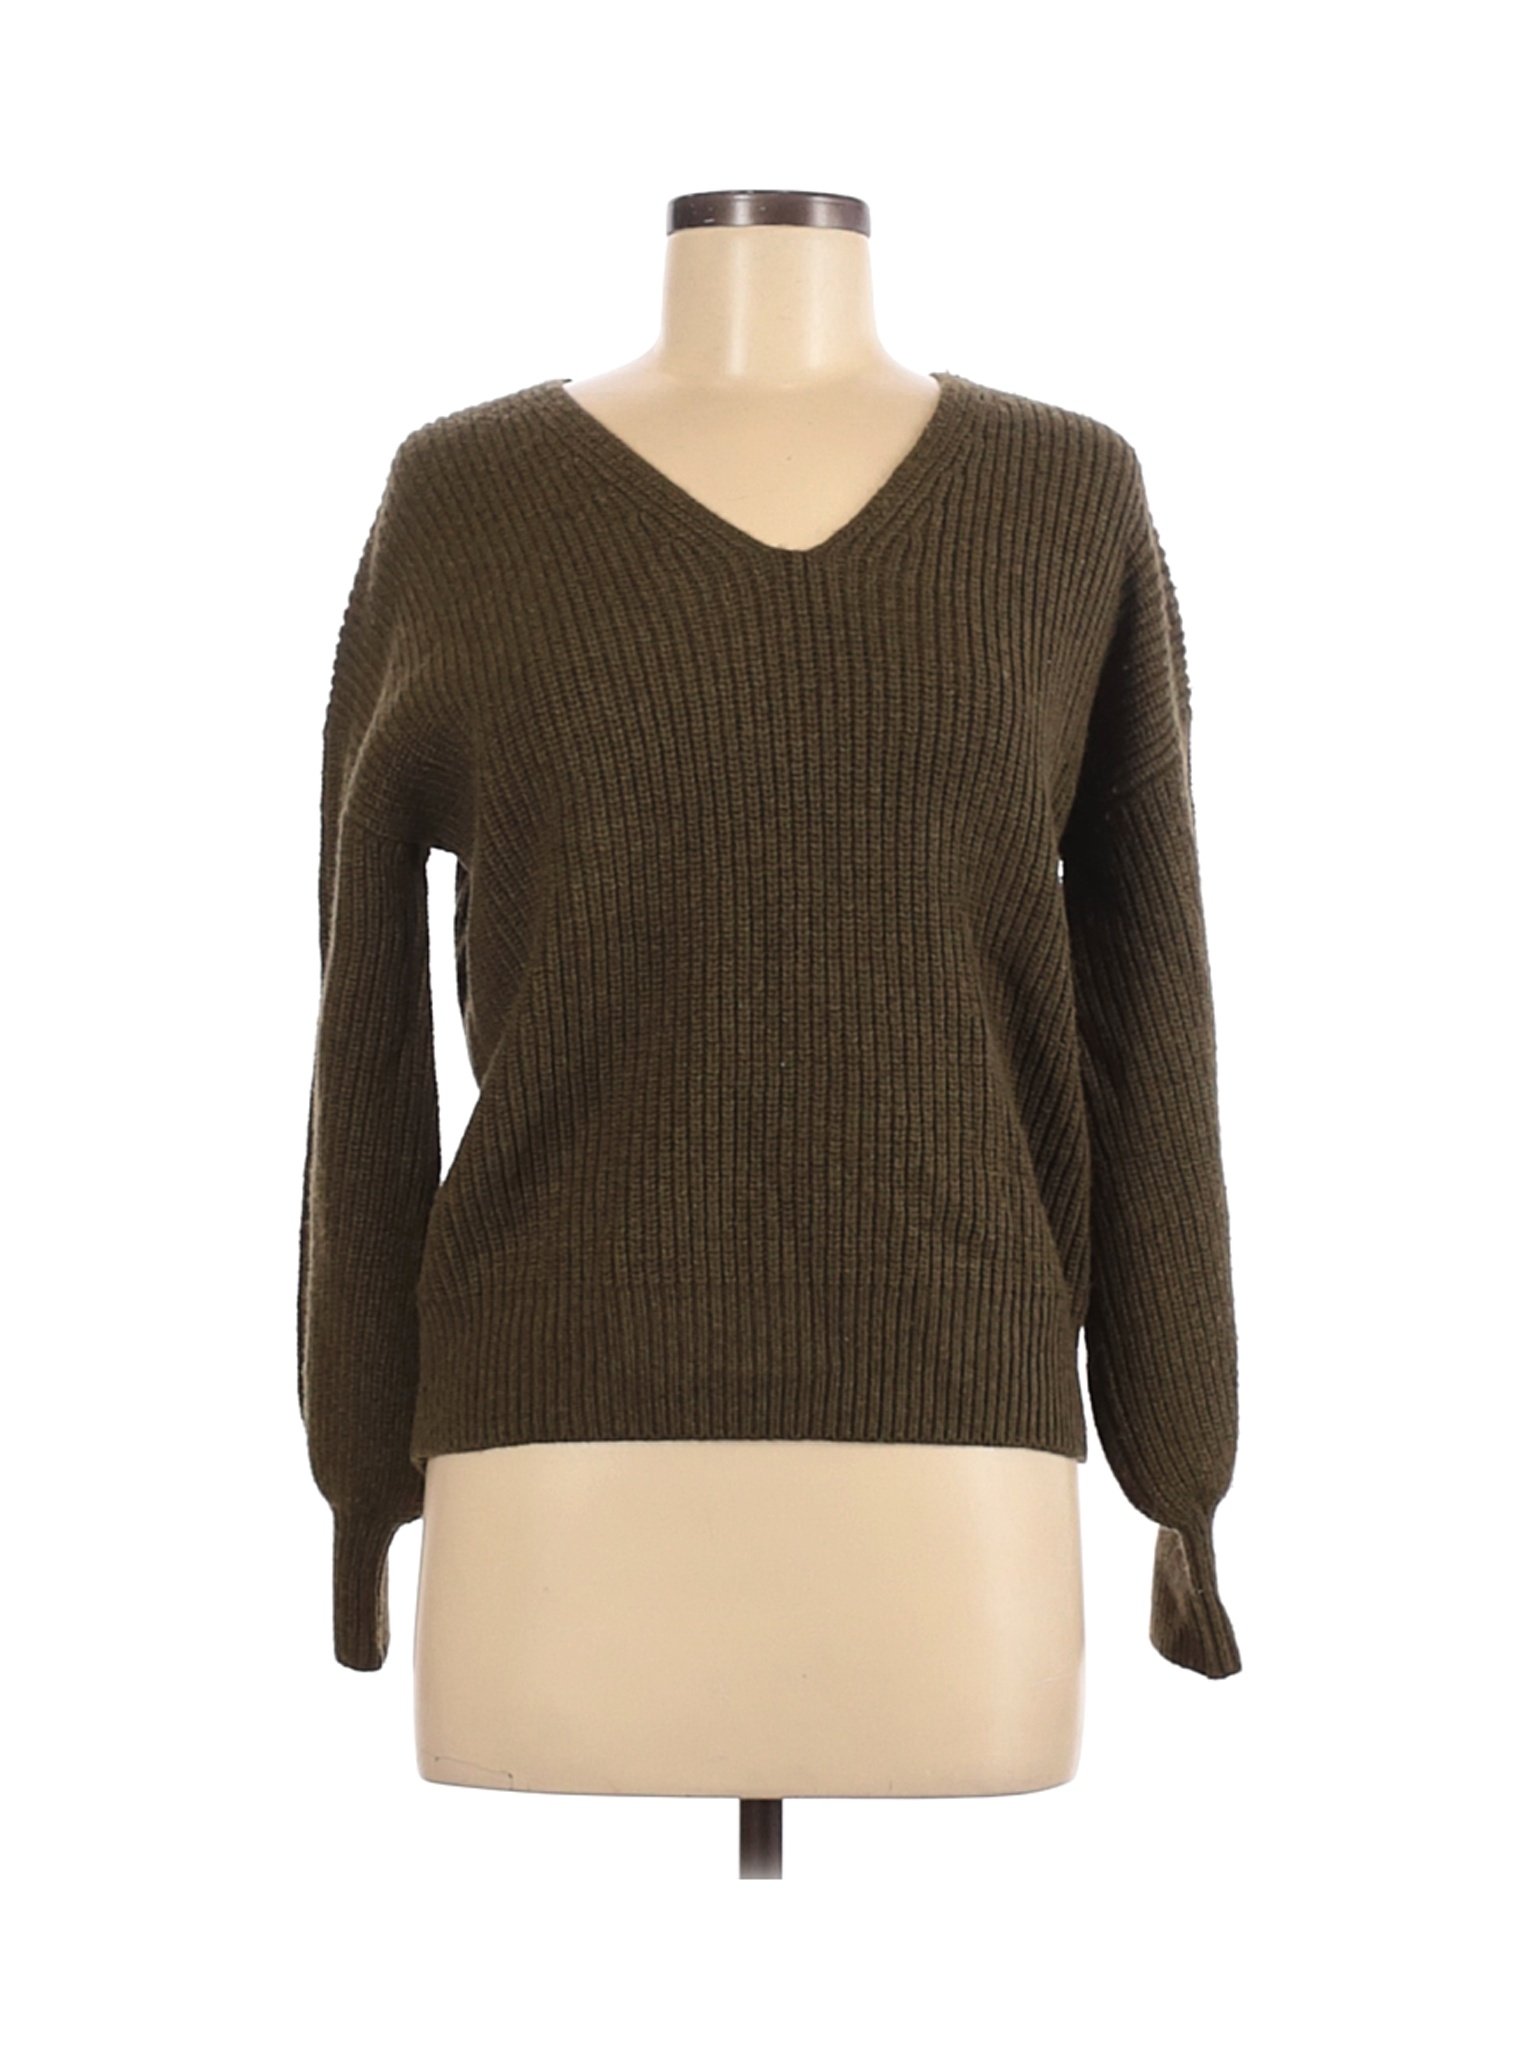 NWT Madewell Women Green Wool Pullover Sweater XS | eBay